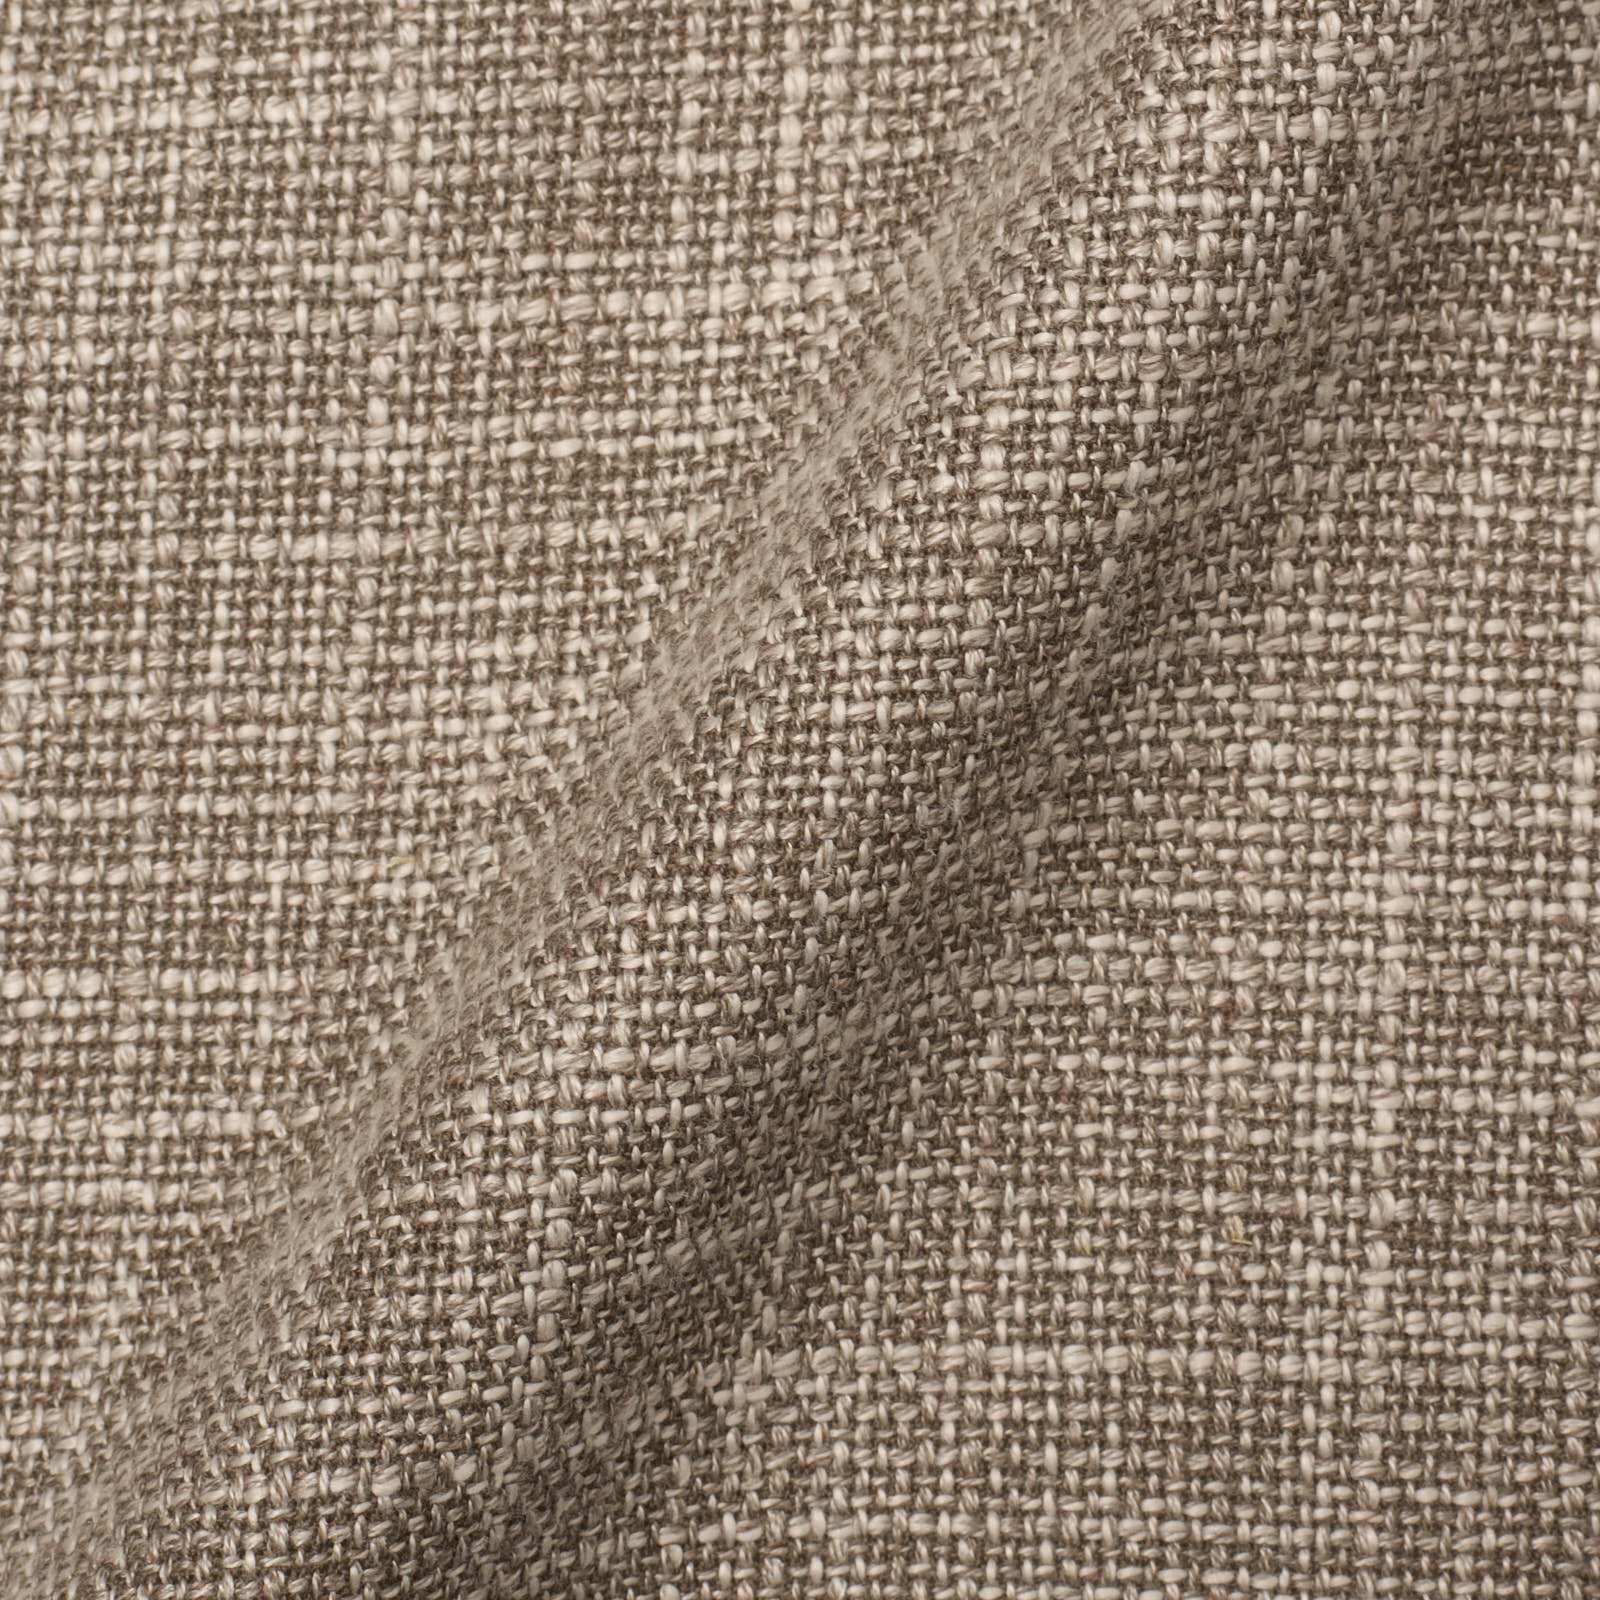 SARTORIO Brown Wool-Cotton-Silk-Linen Hopsack Half Lined Jacket EU 54 US 44 Slim